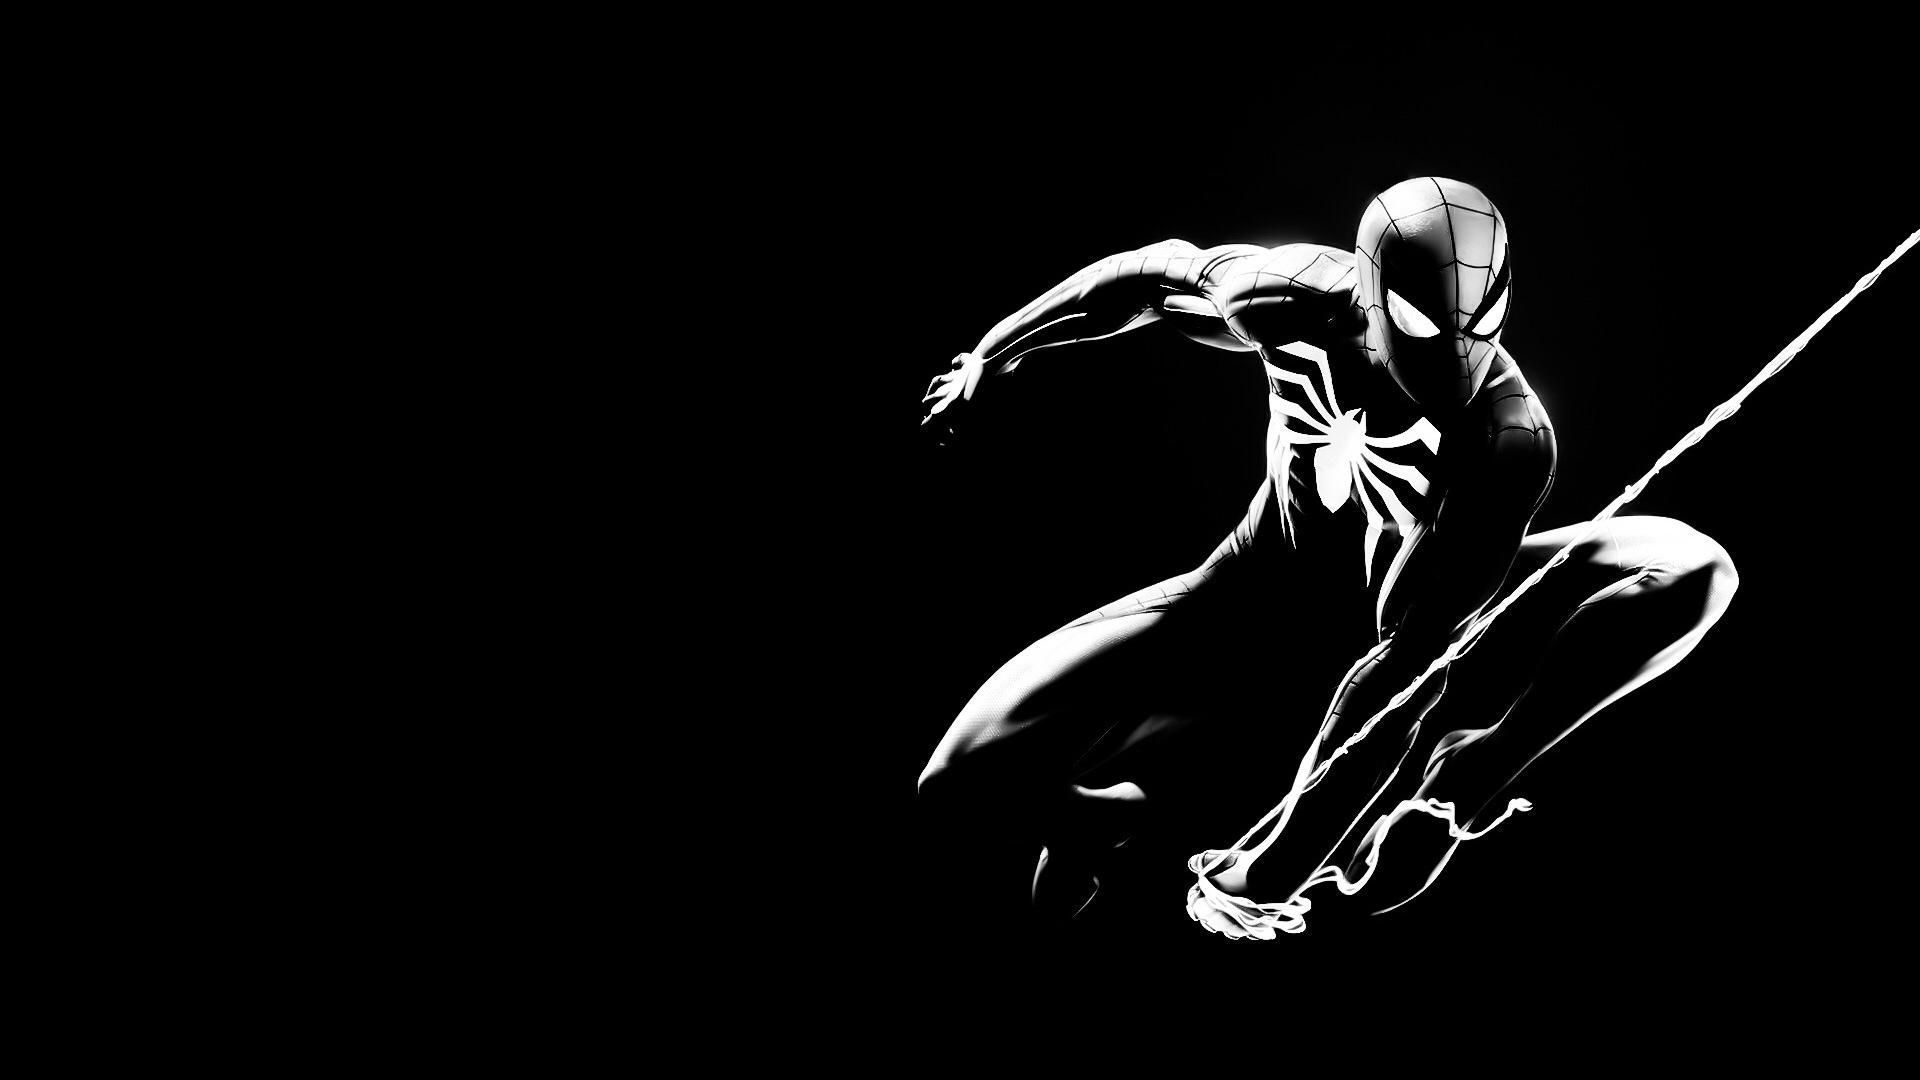 Spider Man Black And White Wallpaper